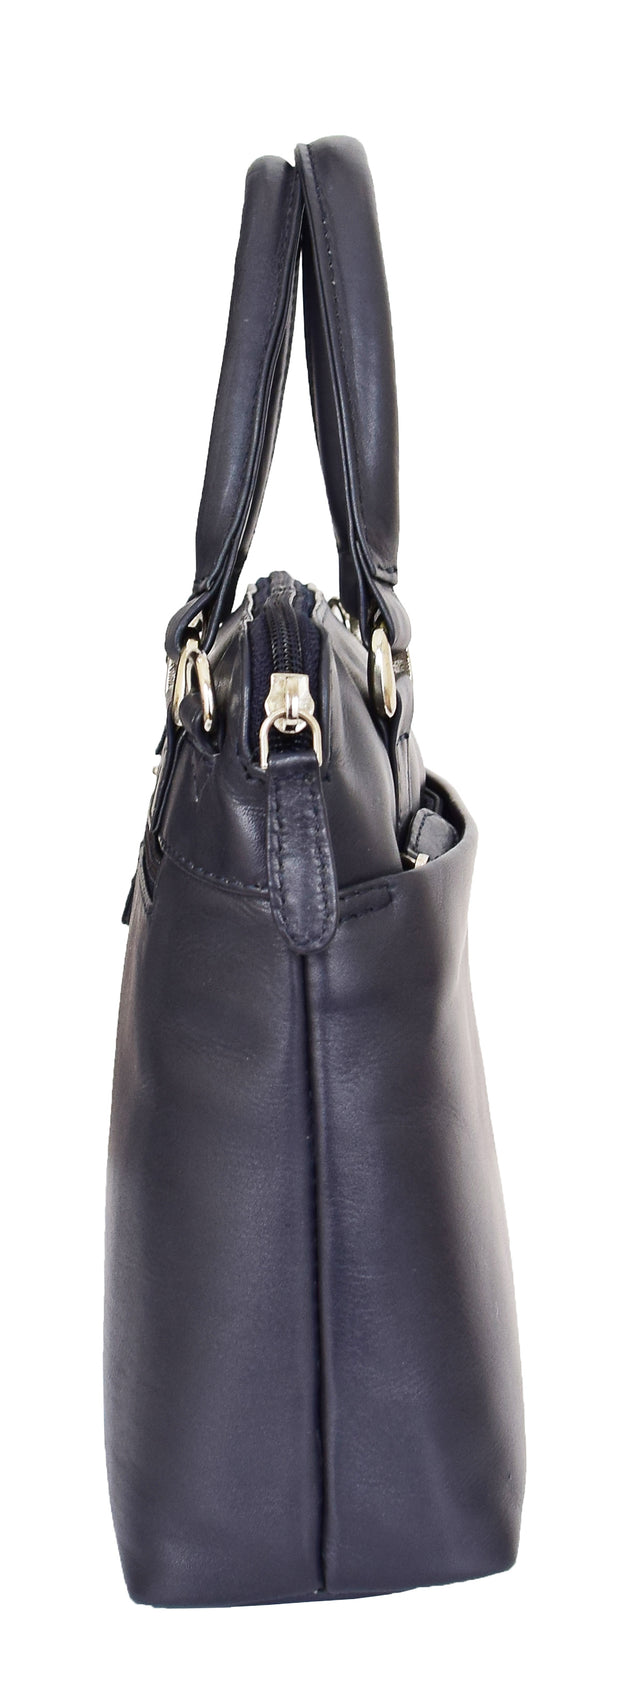 Womens Leather Tote Handbag Trim Small Top Handles Bag Dixie Navy